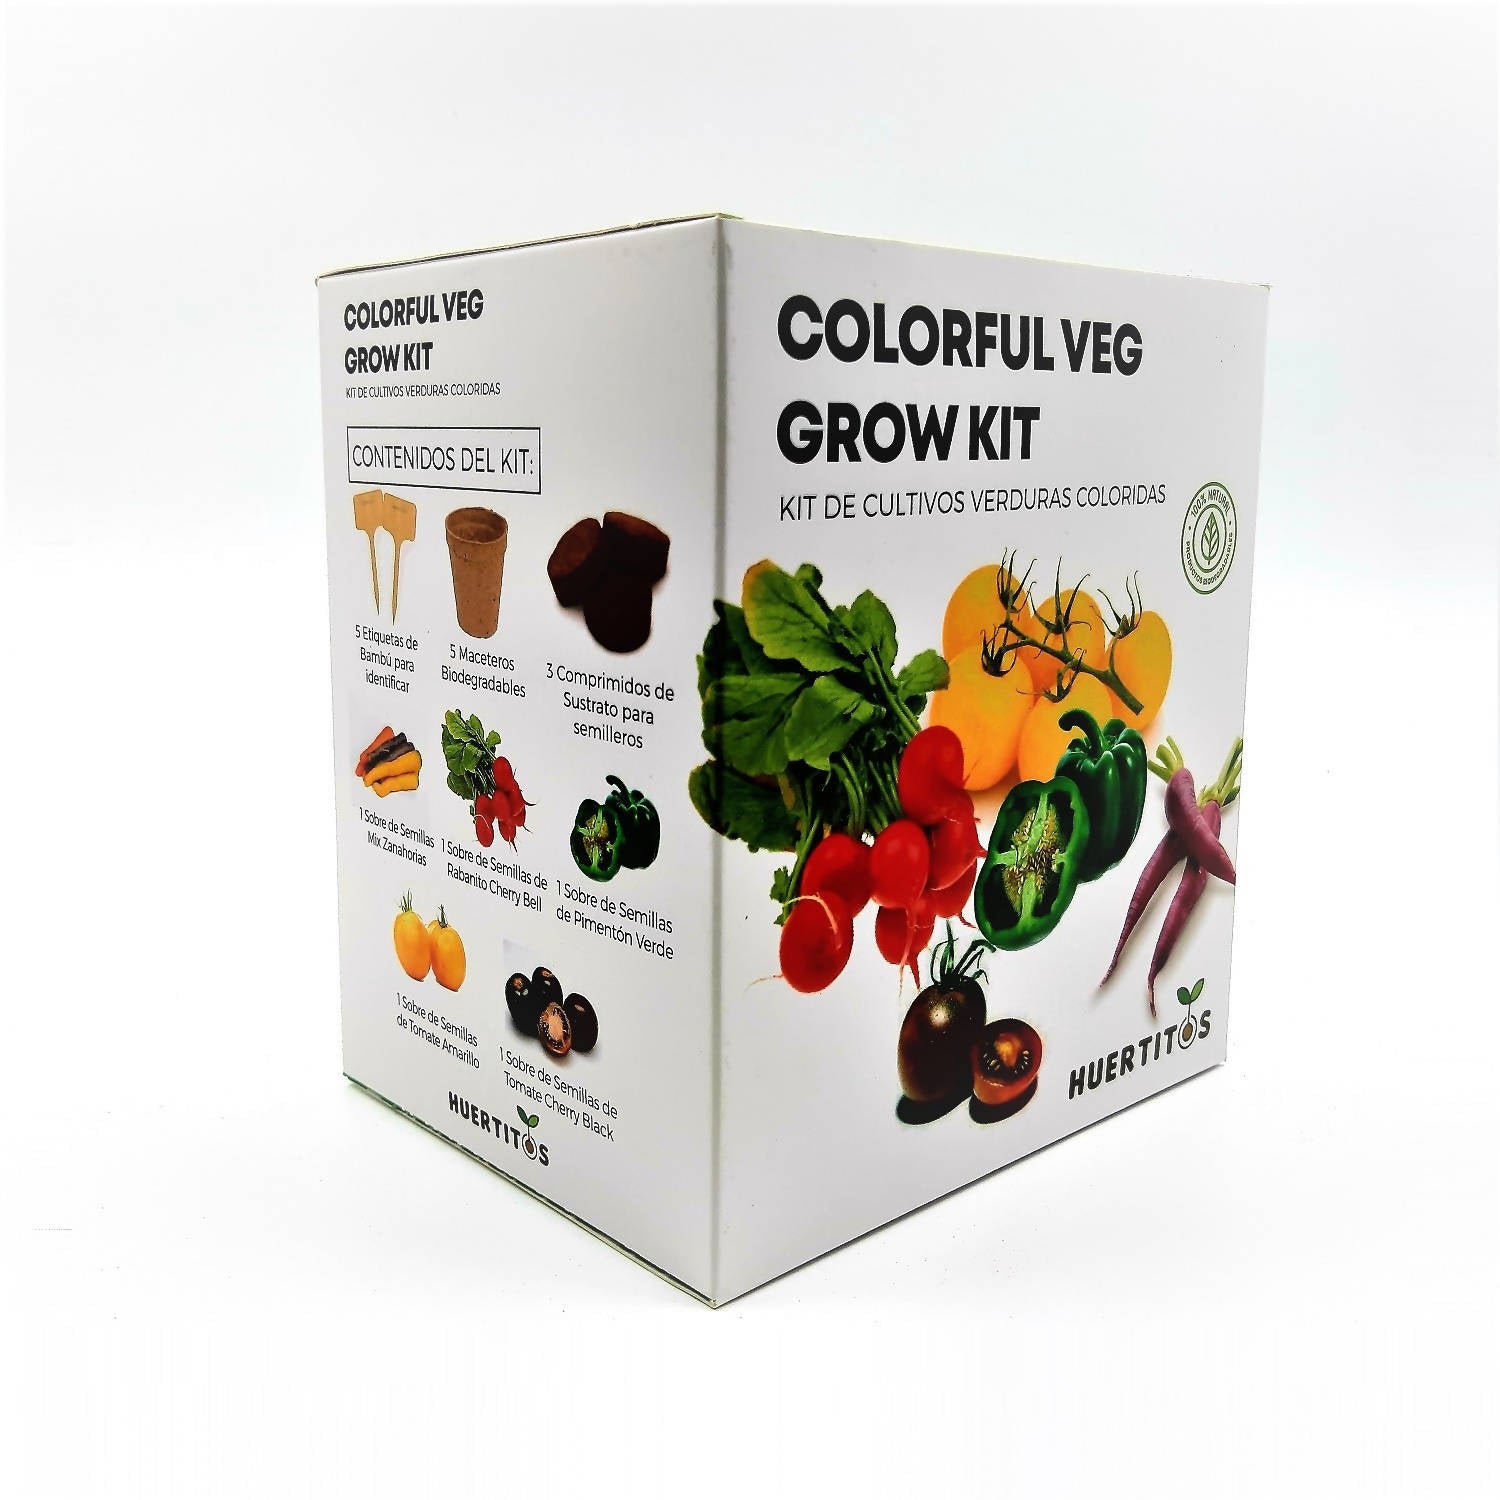 Kit de cultivo Verduras Coloridas (Colorful Veg GROW KIT)